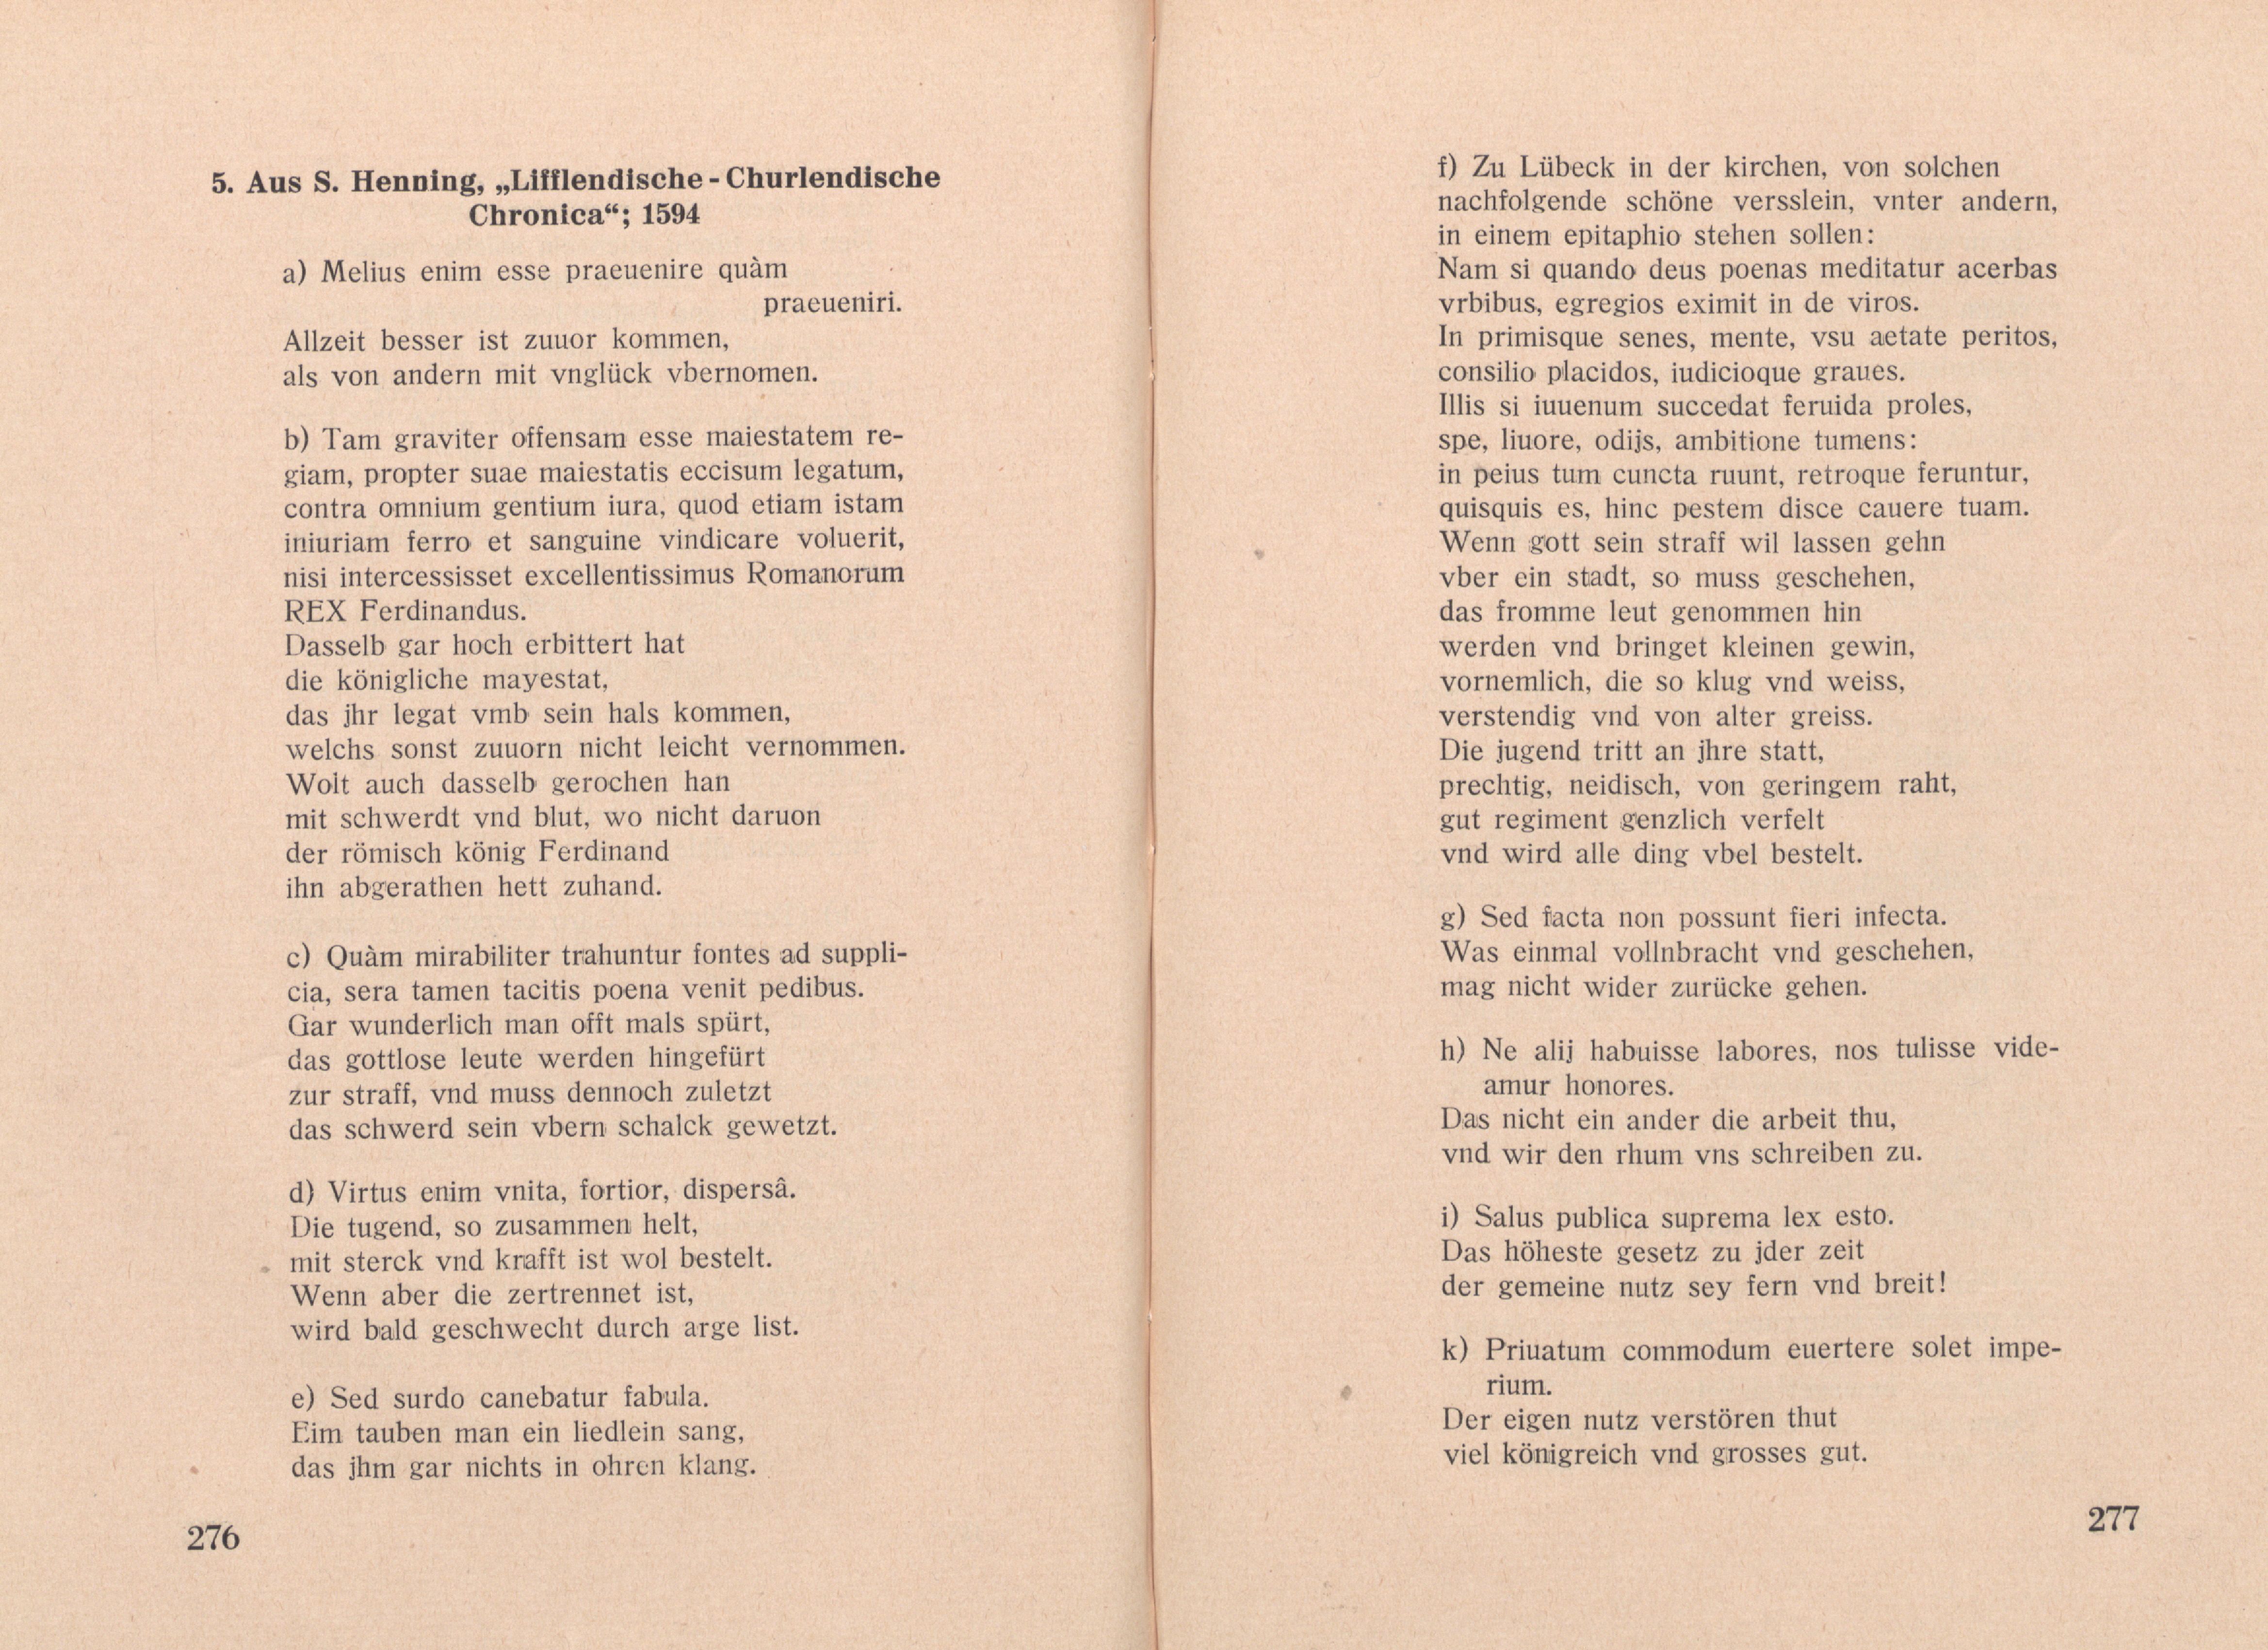 Aus S. Henning, Lifflendische-Churlendische Chronica (1594) | 1. (276-277) Основной текст